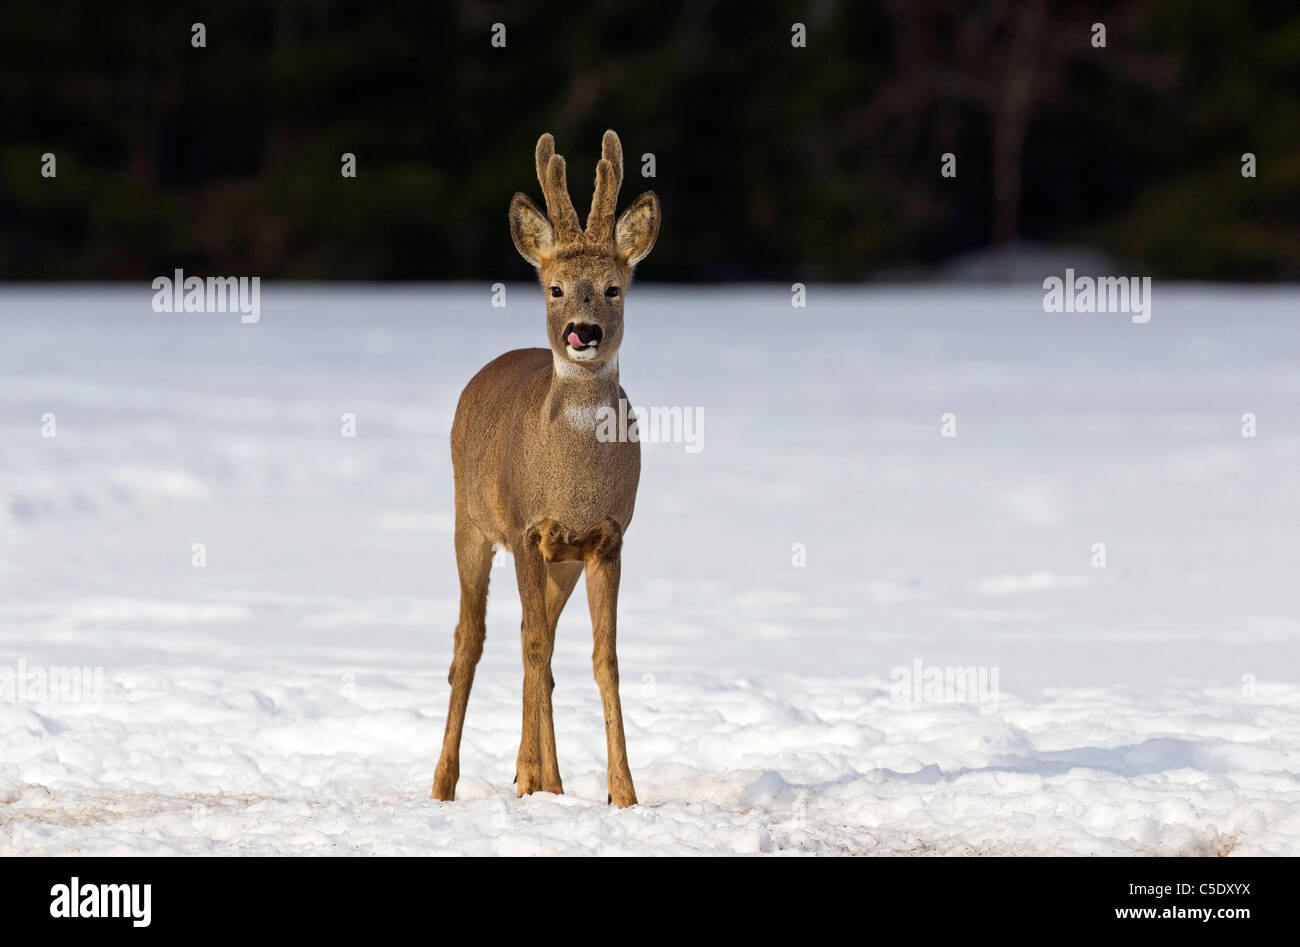 Portrait of a Roe deer standing on winter landscape Stock Photo